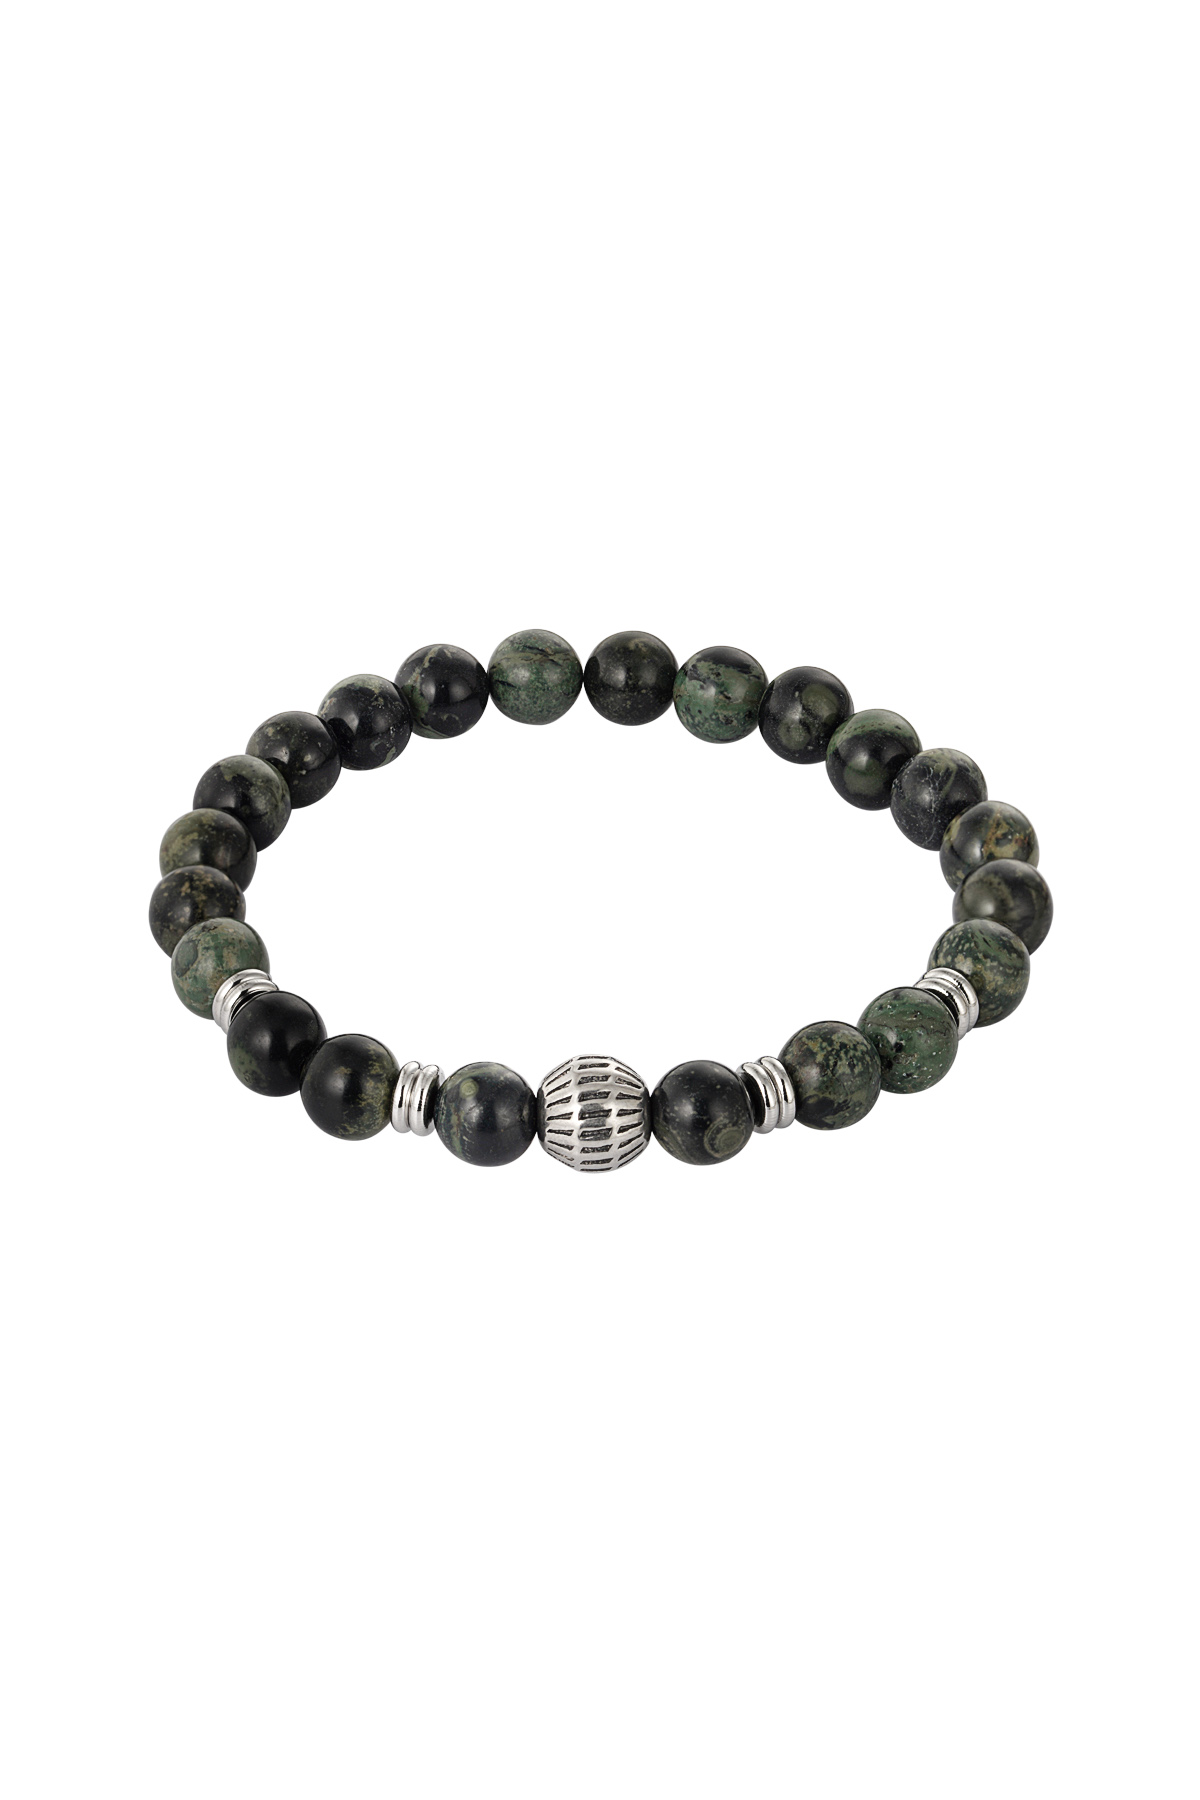 Schlichter Herren-Perlenarmband-Charm – dunkelgrün